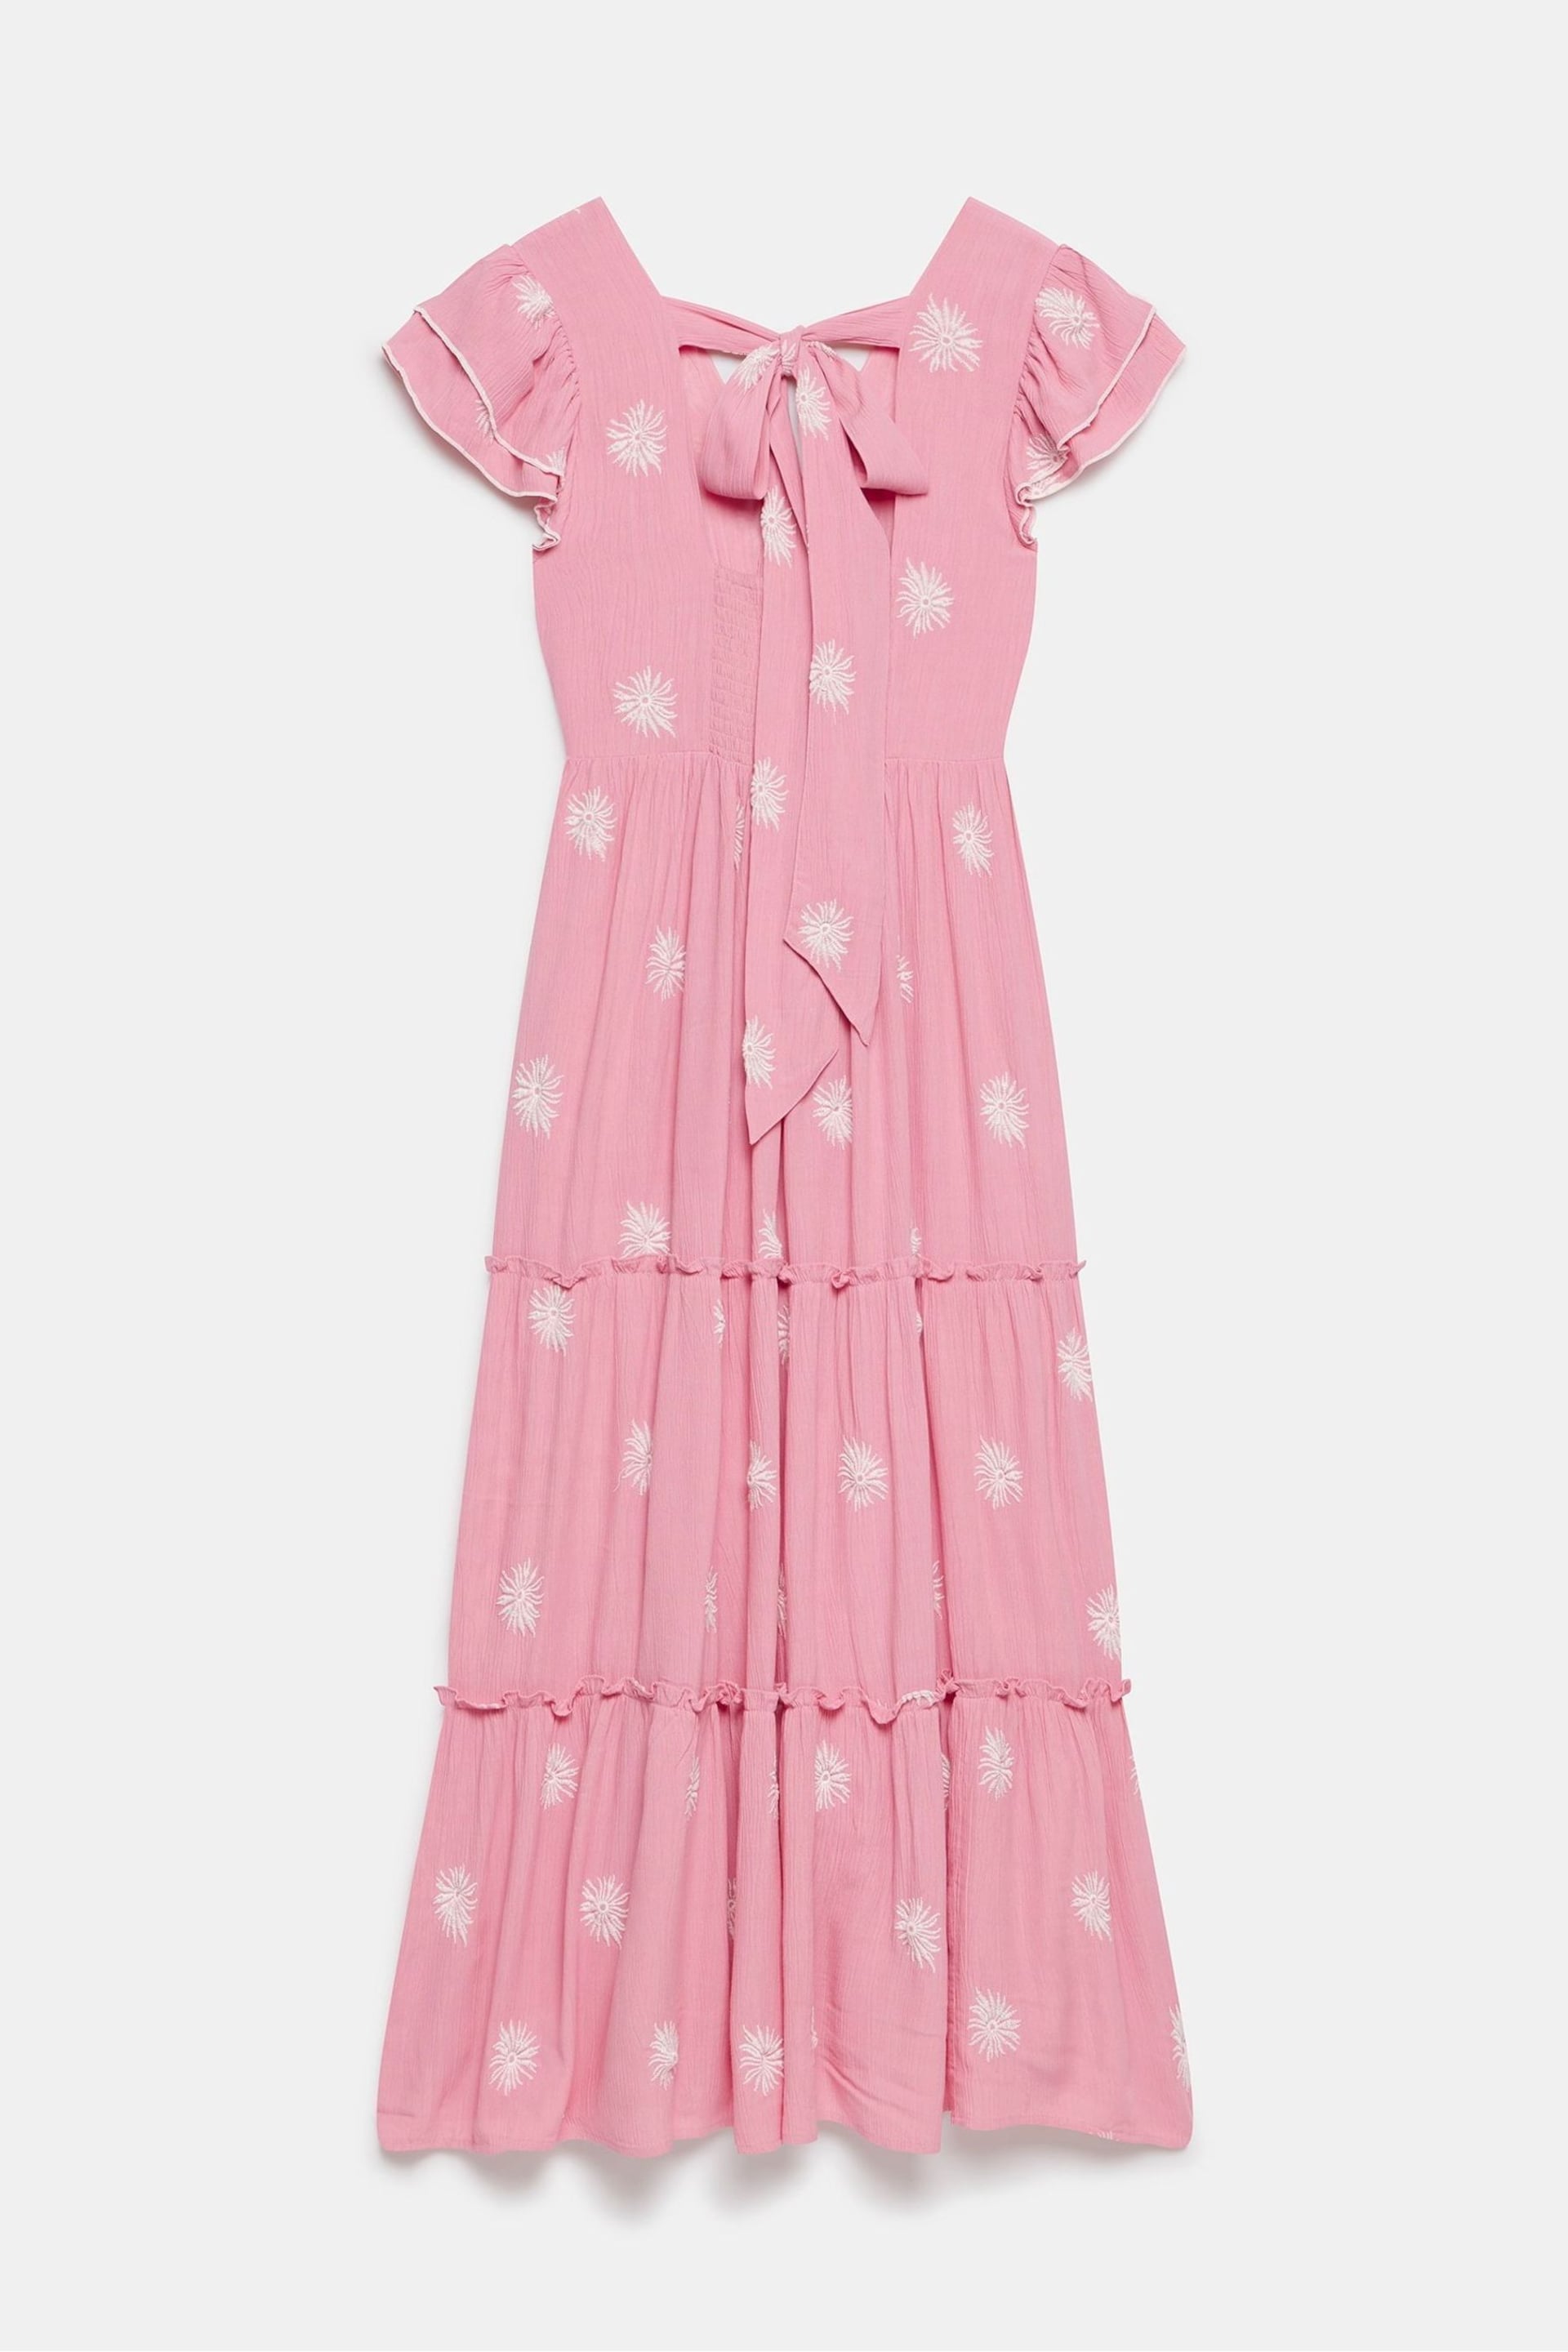 Mint Velvet Pink Floral Embroidered Maxi Dress - Image 4 of 4